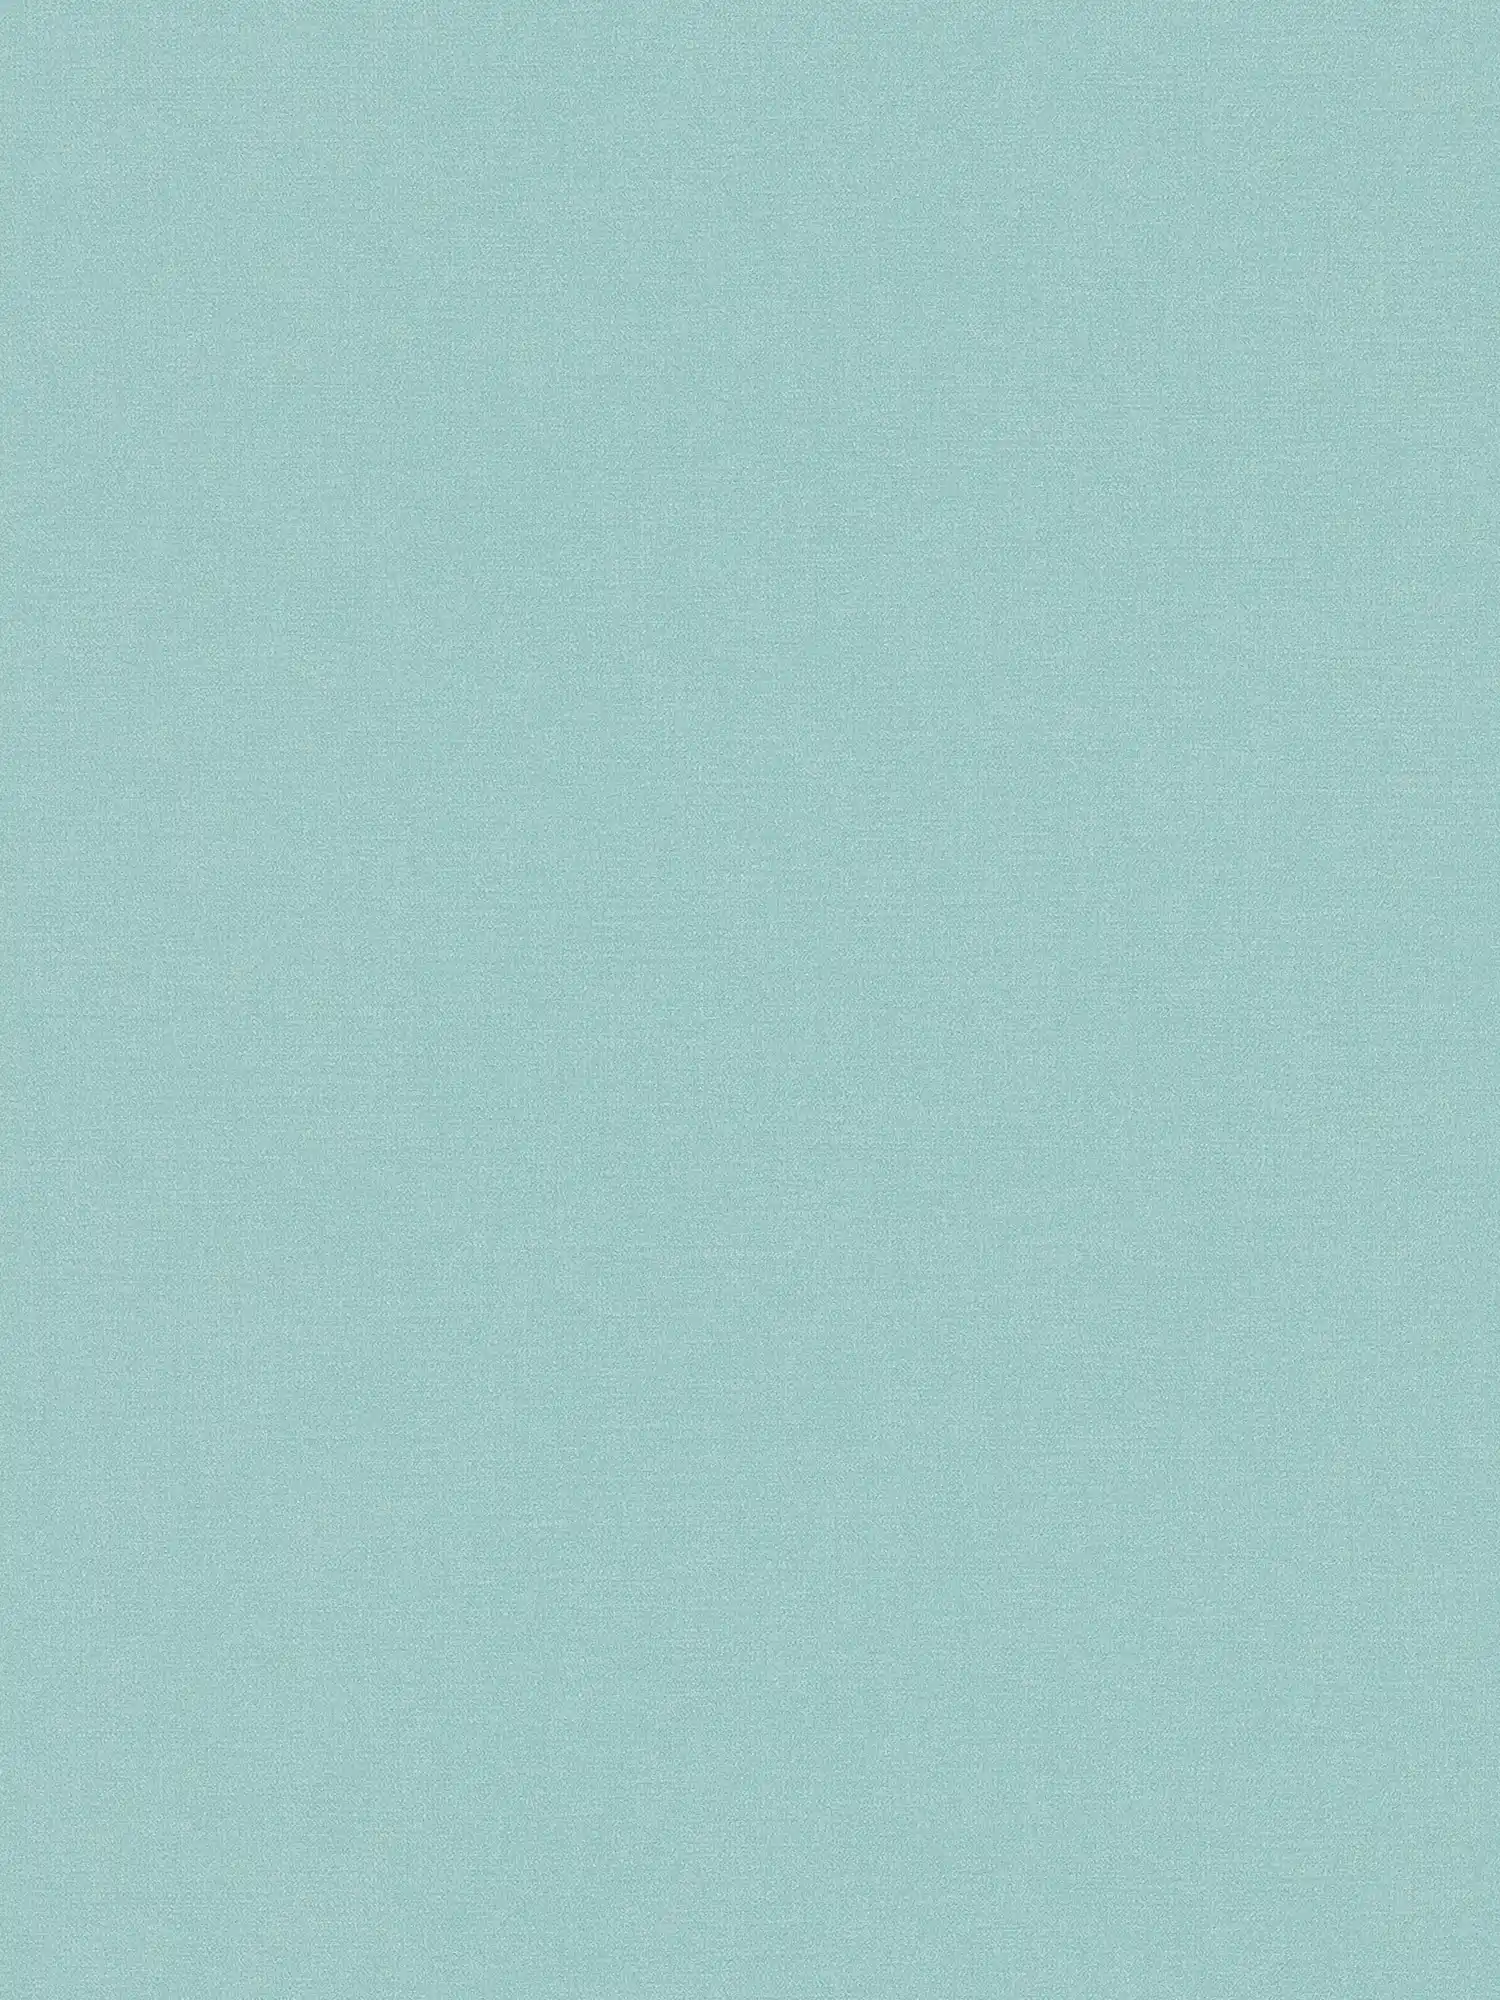 Papier peint intissé uni au look marin - turquoise
